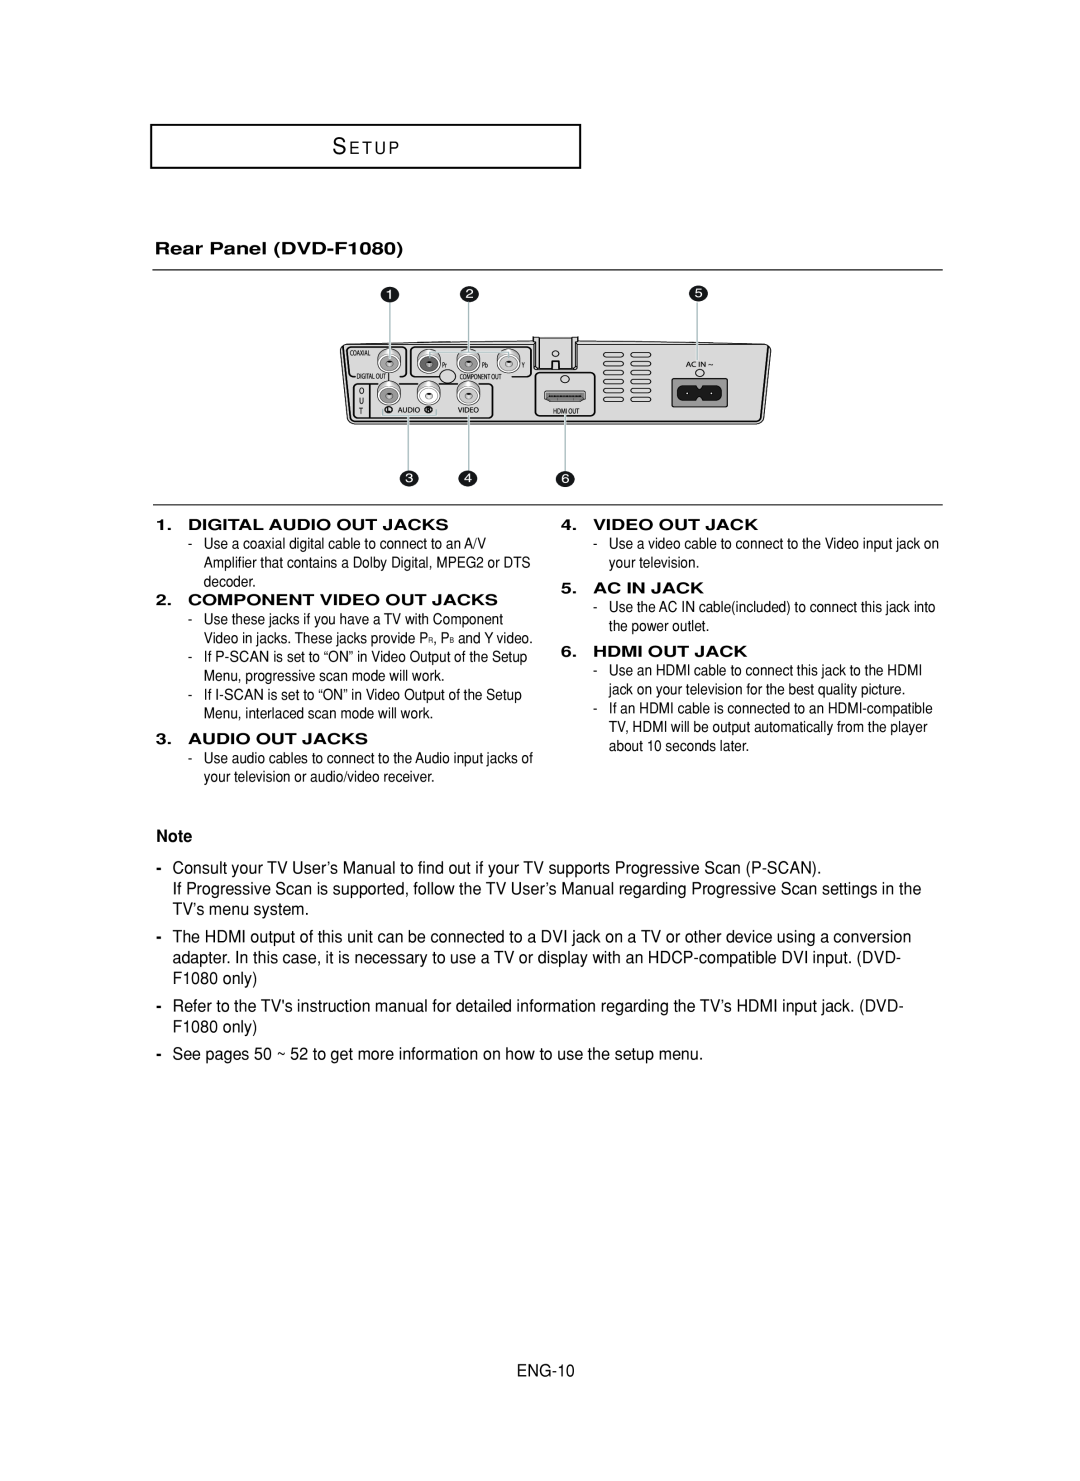 Samsung DVD-FP580 manual Rear Panel DVD-F1080 